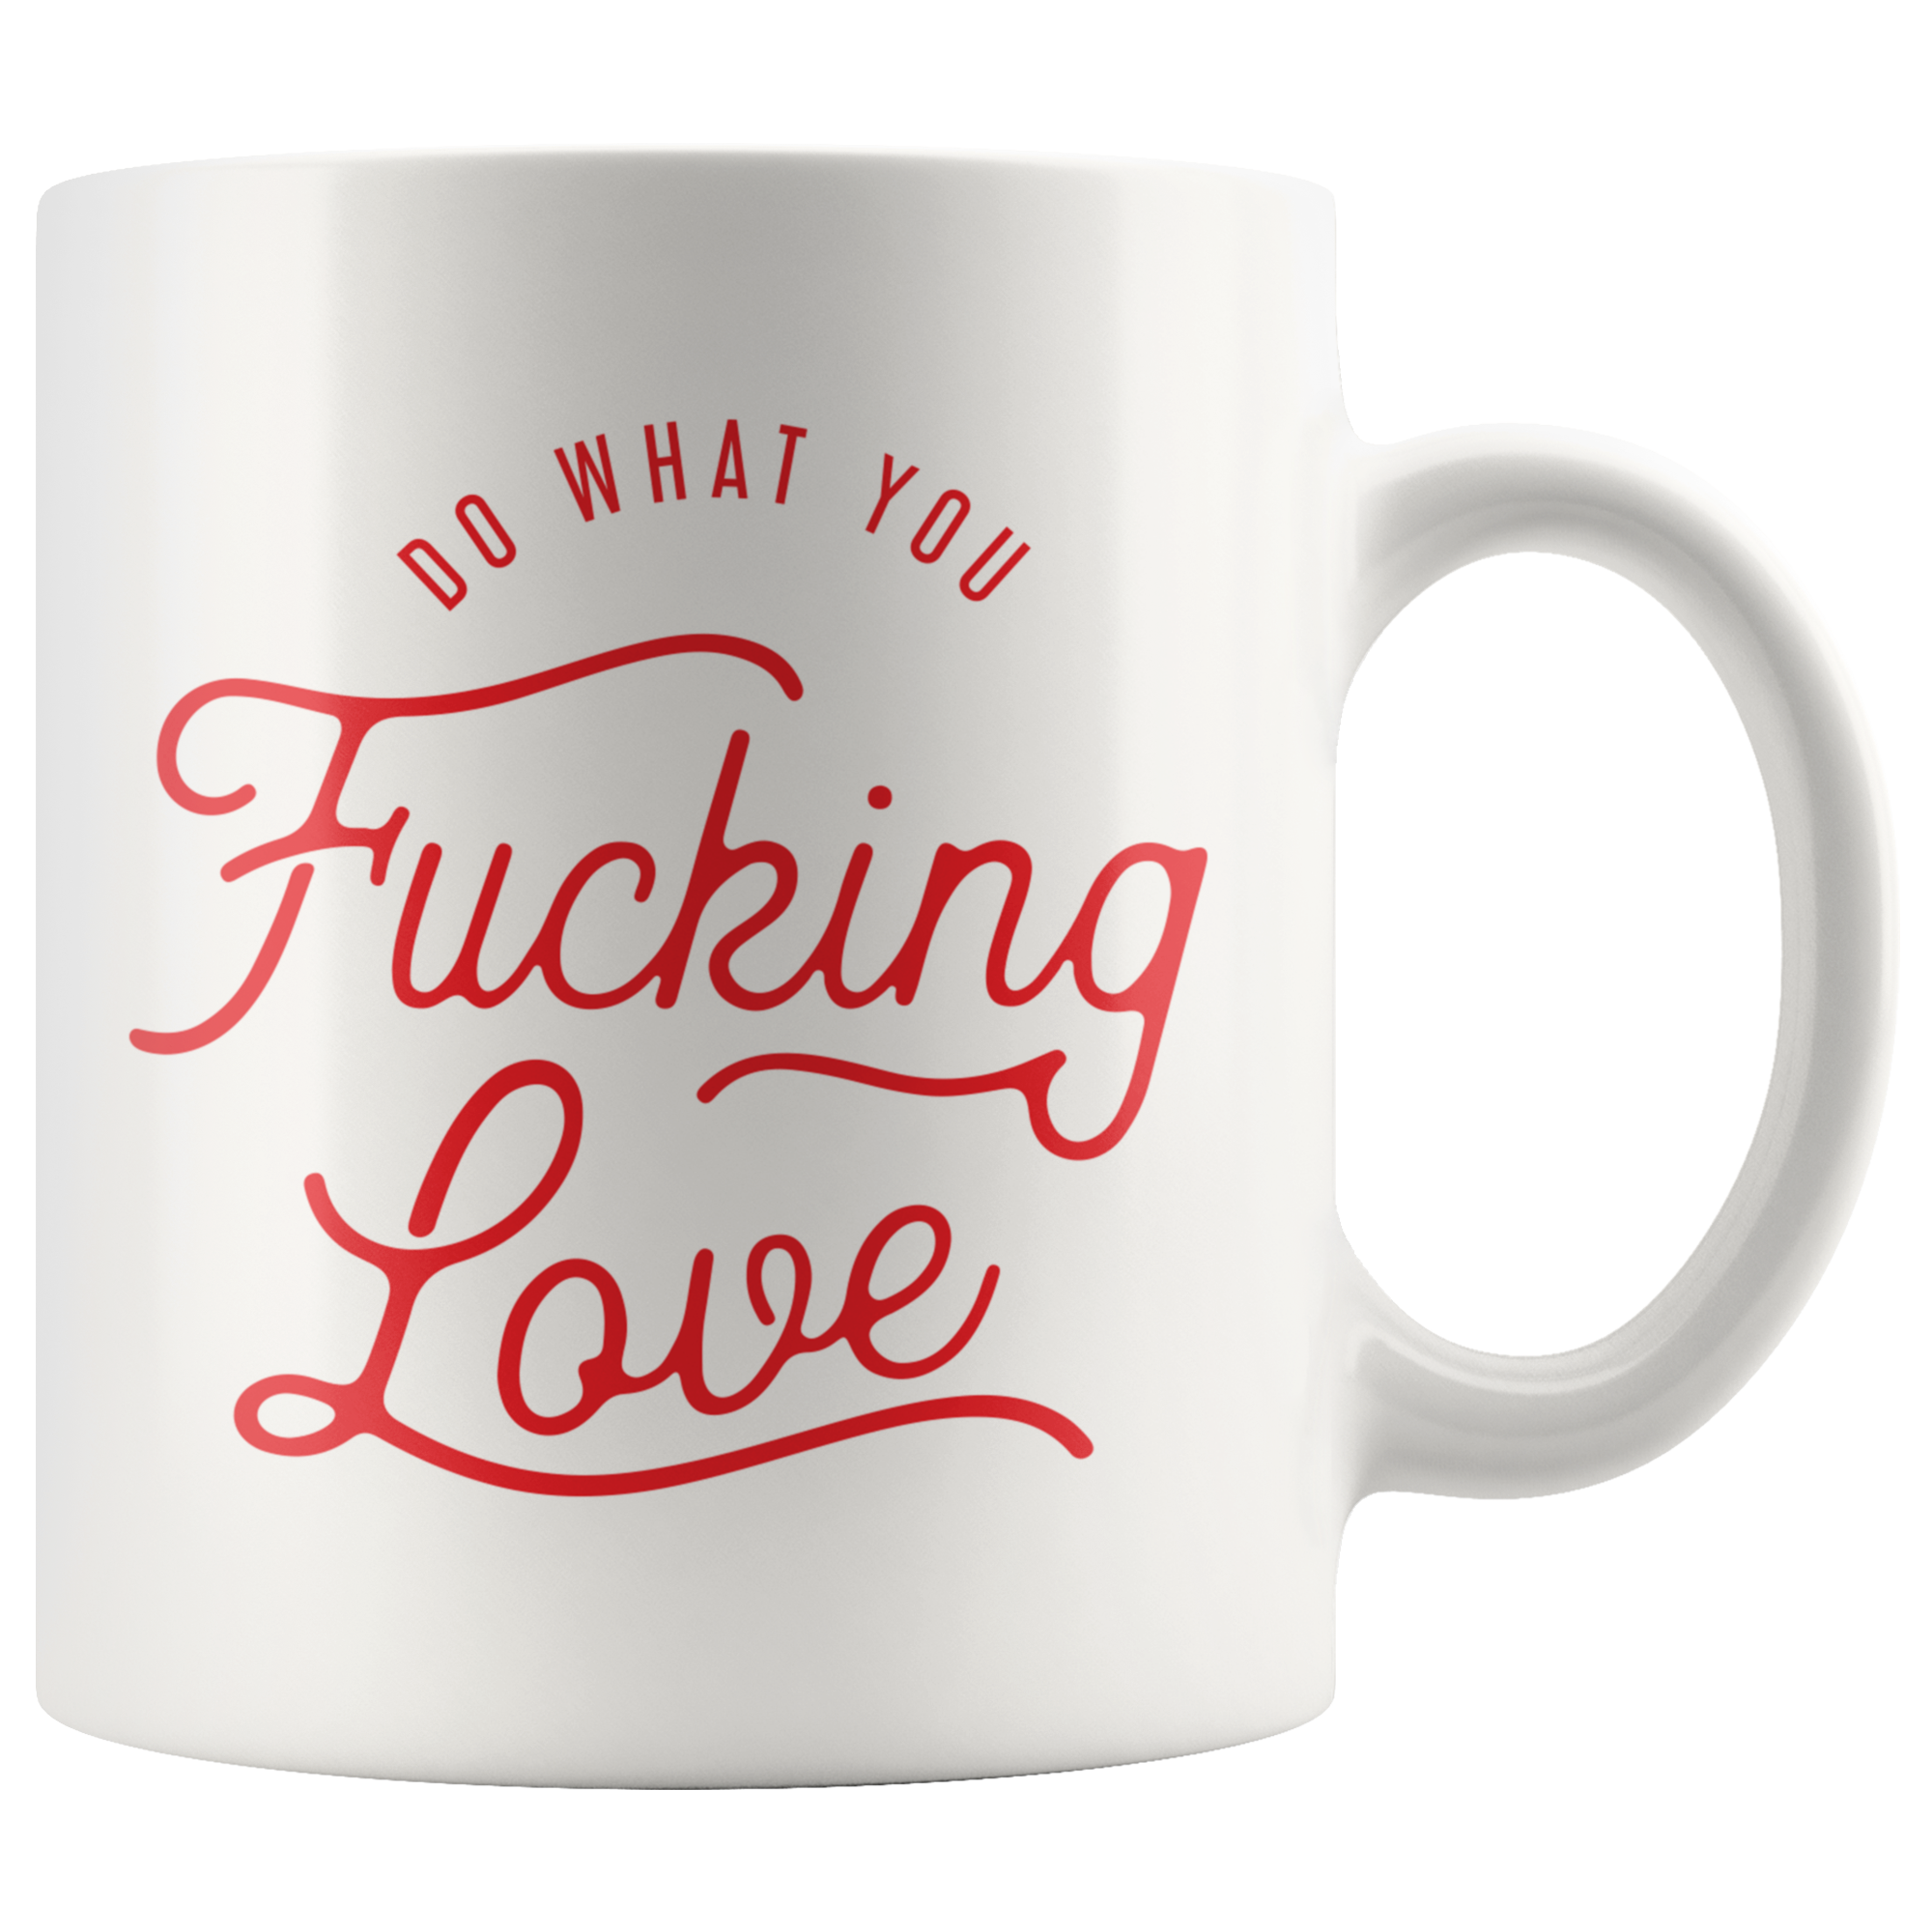 Do What You Leave Coffee Mug